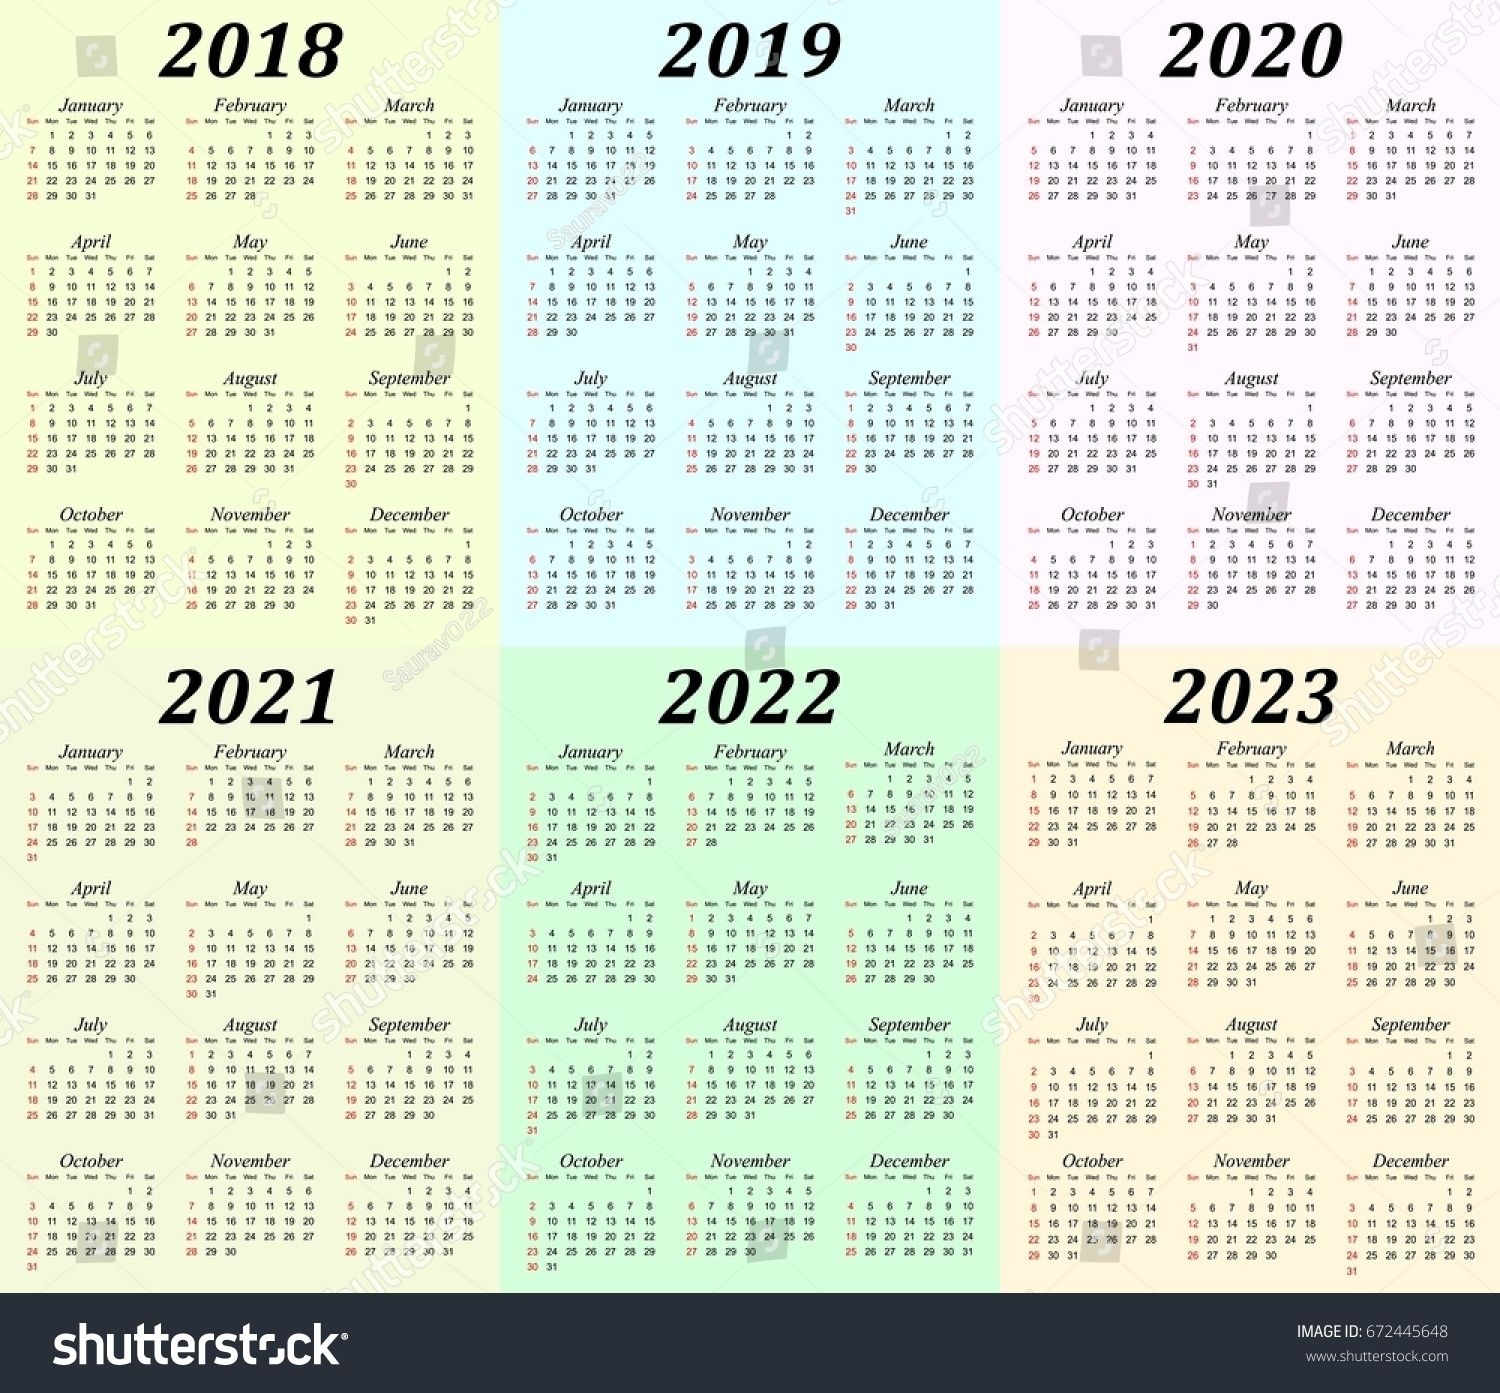 2020 To 2023 Calendars Printable Calendar Design Calendar Printables